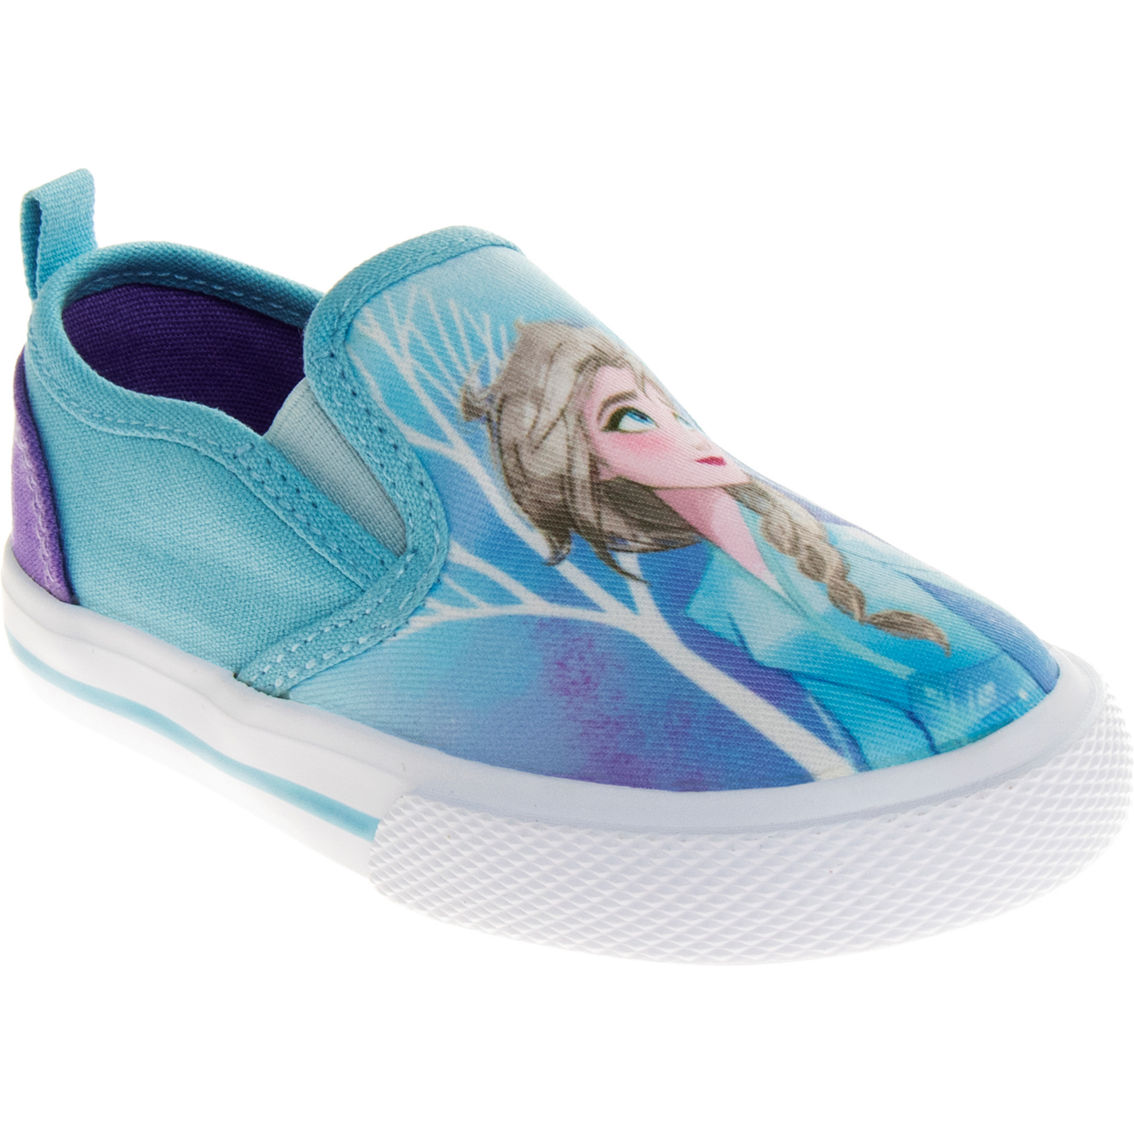 Disney Frozen Toddler Girls Slip On Sneakers - Image 2 of 5